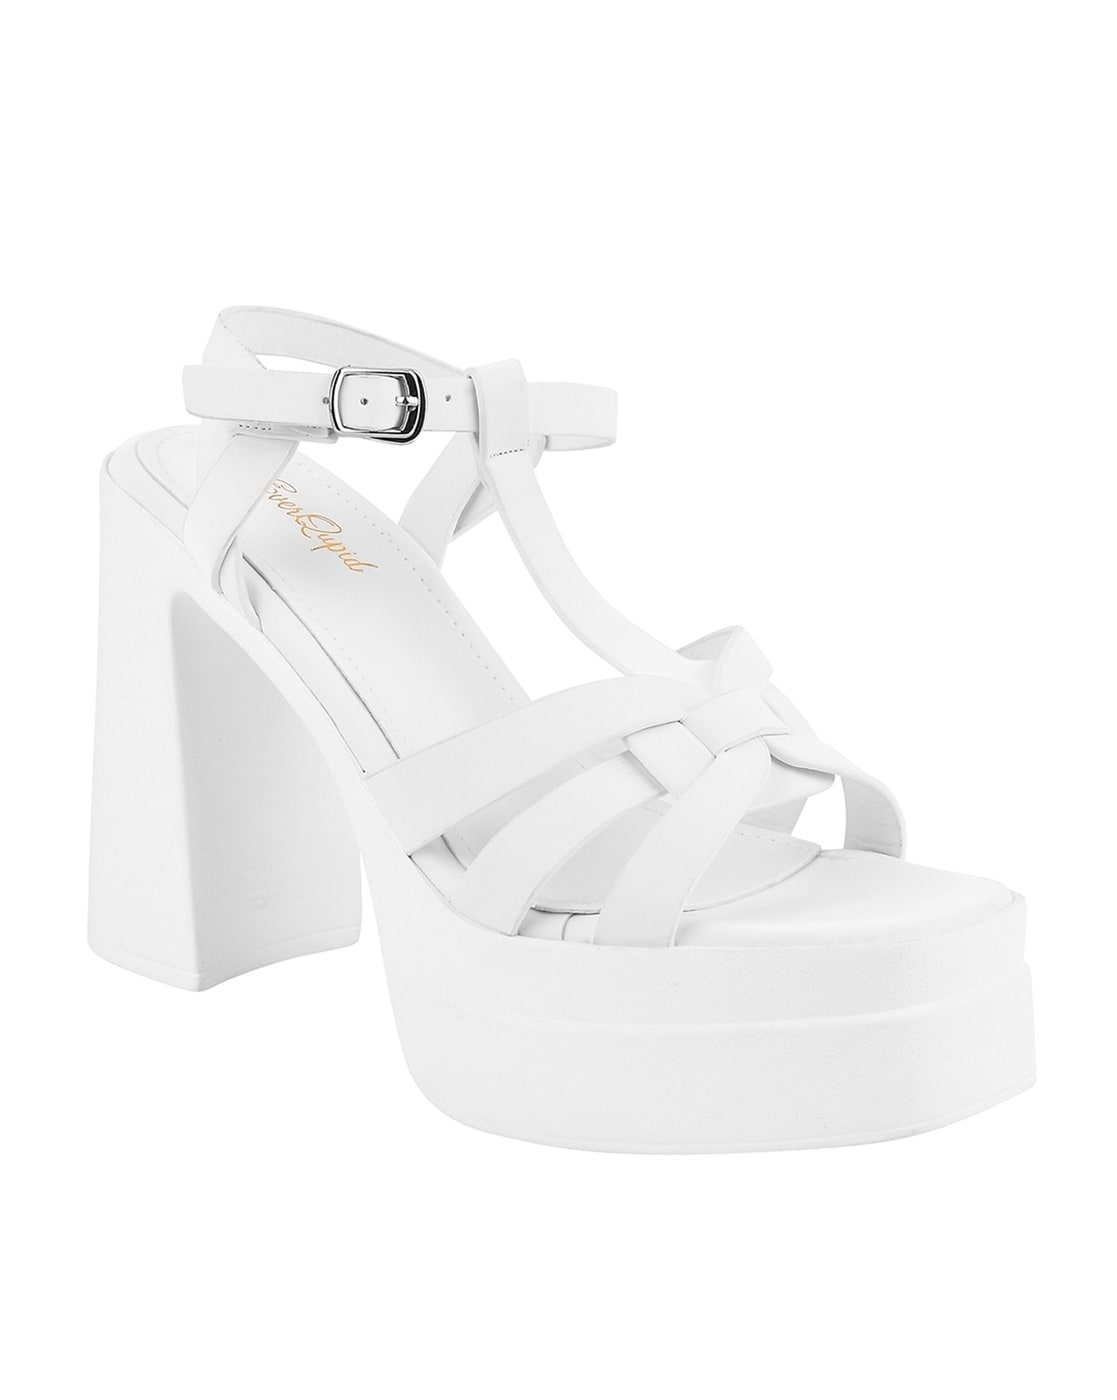 Buy White Women's Sandals - The Miso White | Tresmode